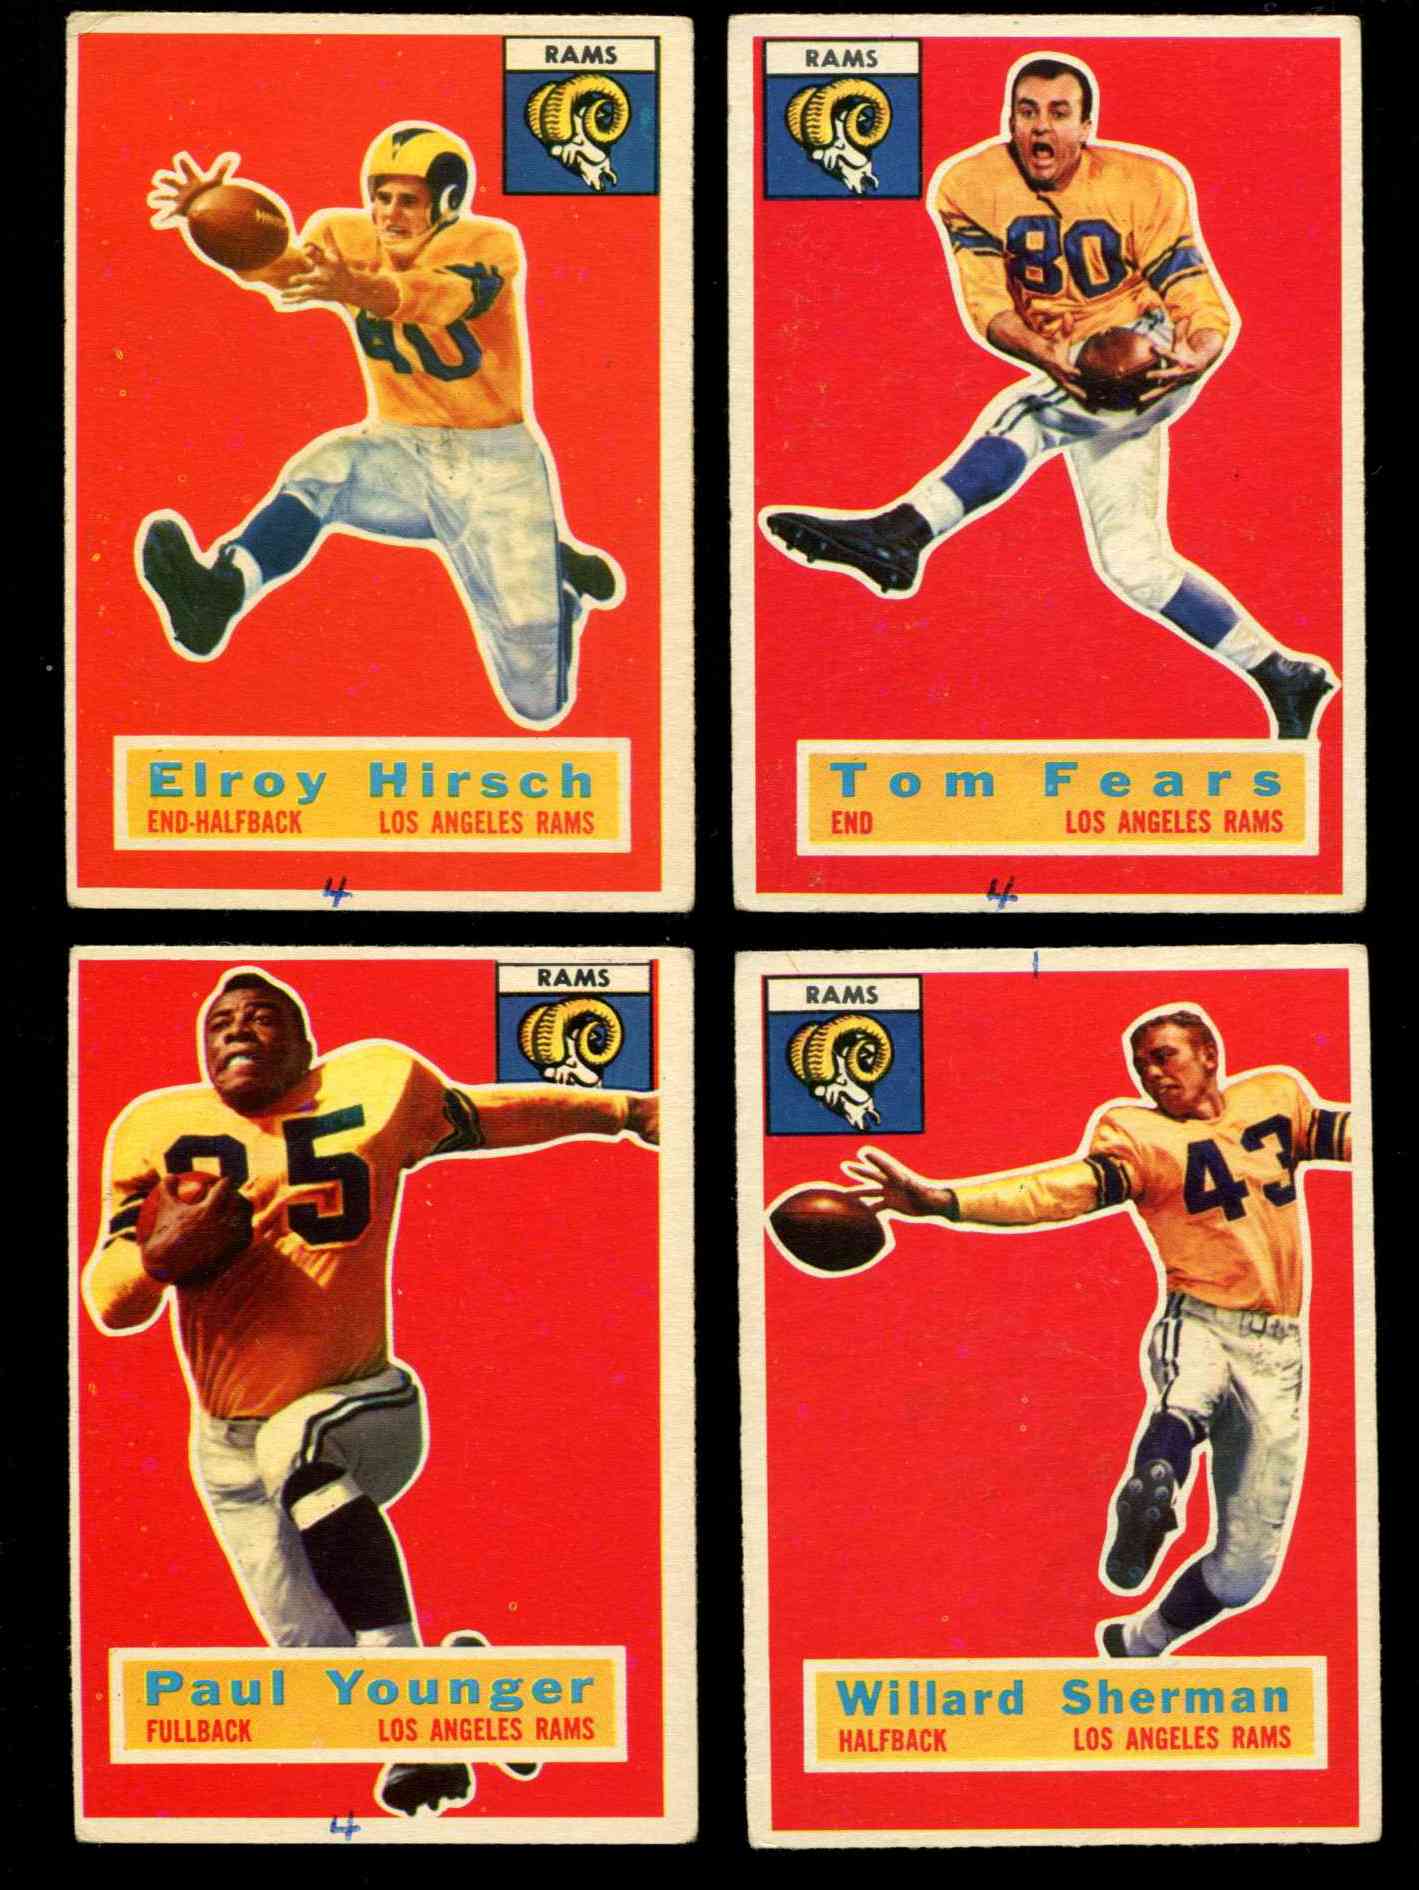  Los Angeles RAMS - 1956 Topps Football Team Lot (3) Football cards value